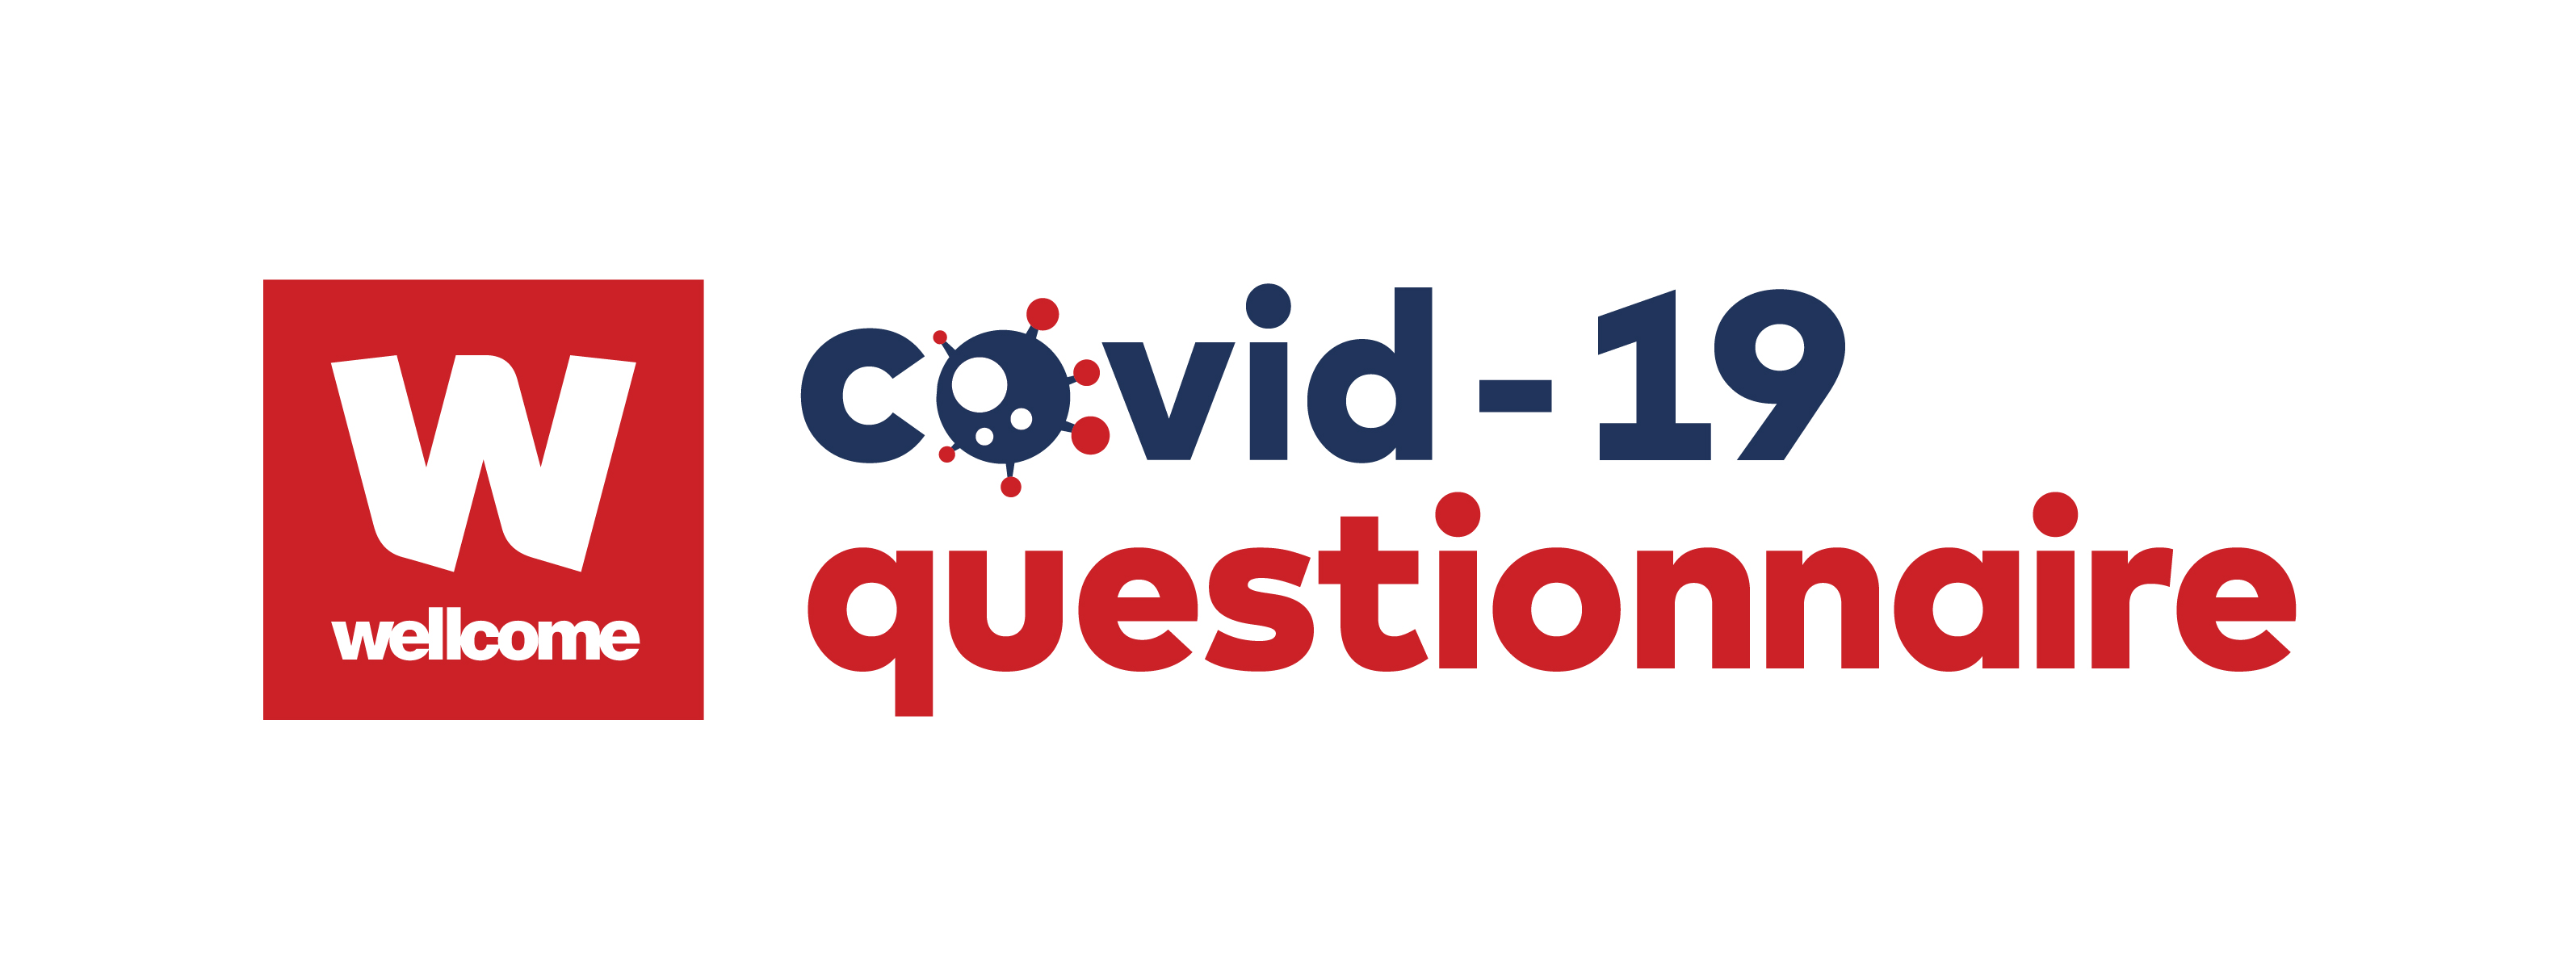 Wellcome Covid-19 questionnaire logo